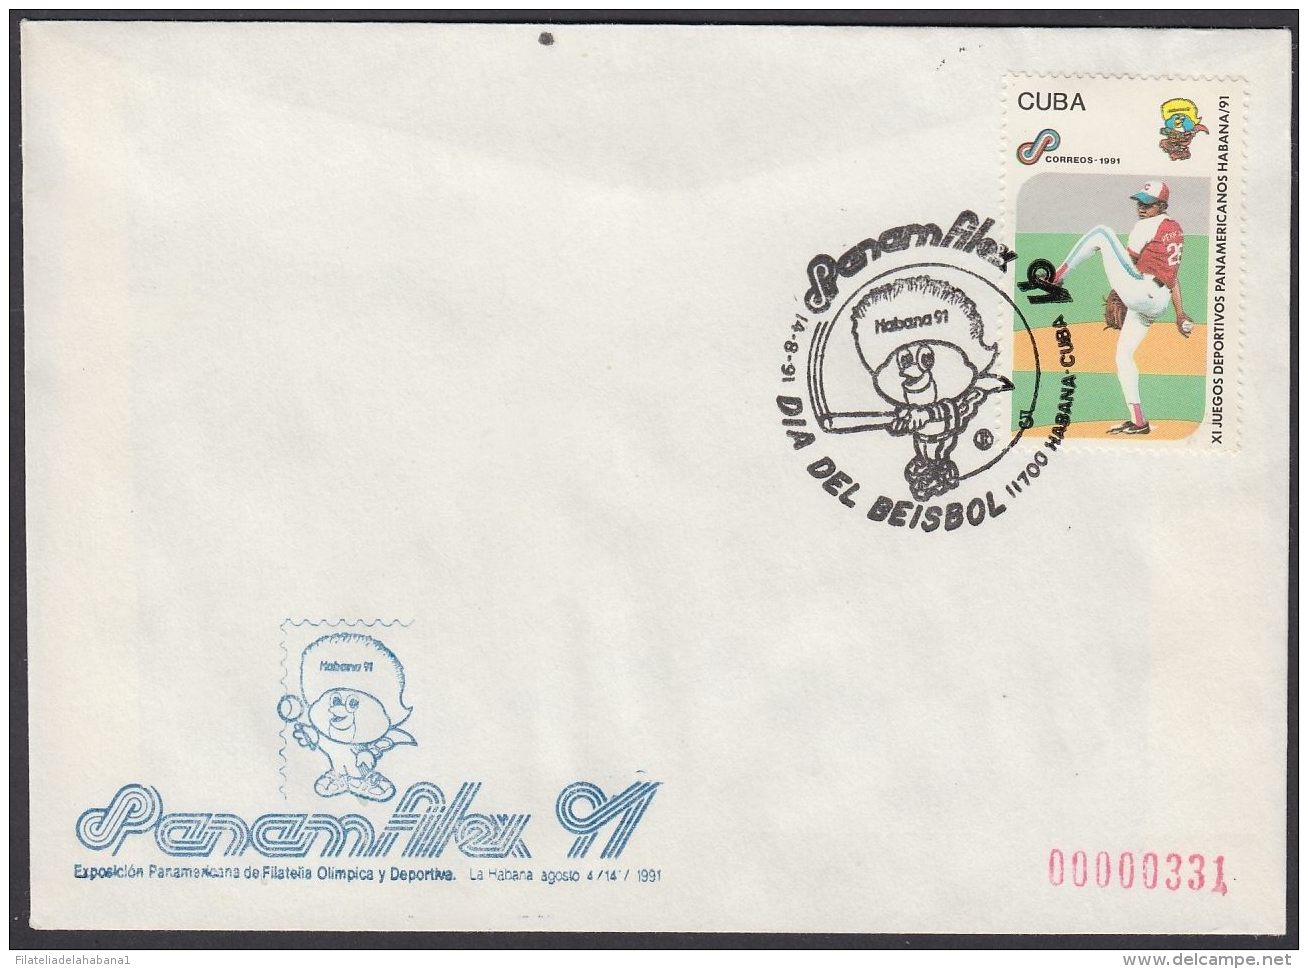 1991-CE-40 CUBA 1991 SPECIAL CANCEL. PANAMFILEX EXPO. DIA DEL BEISBOL. BASEBALL. - Cartas & Documentos